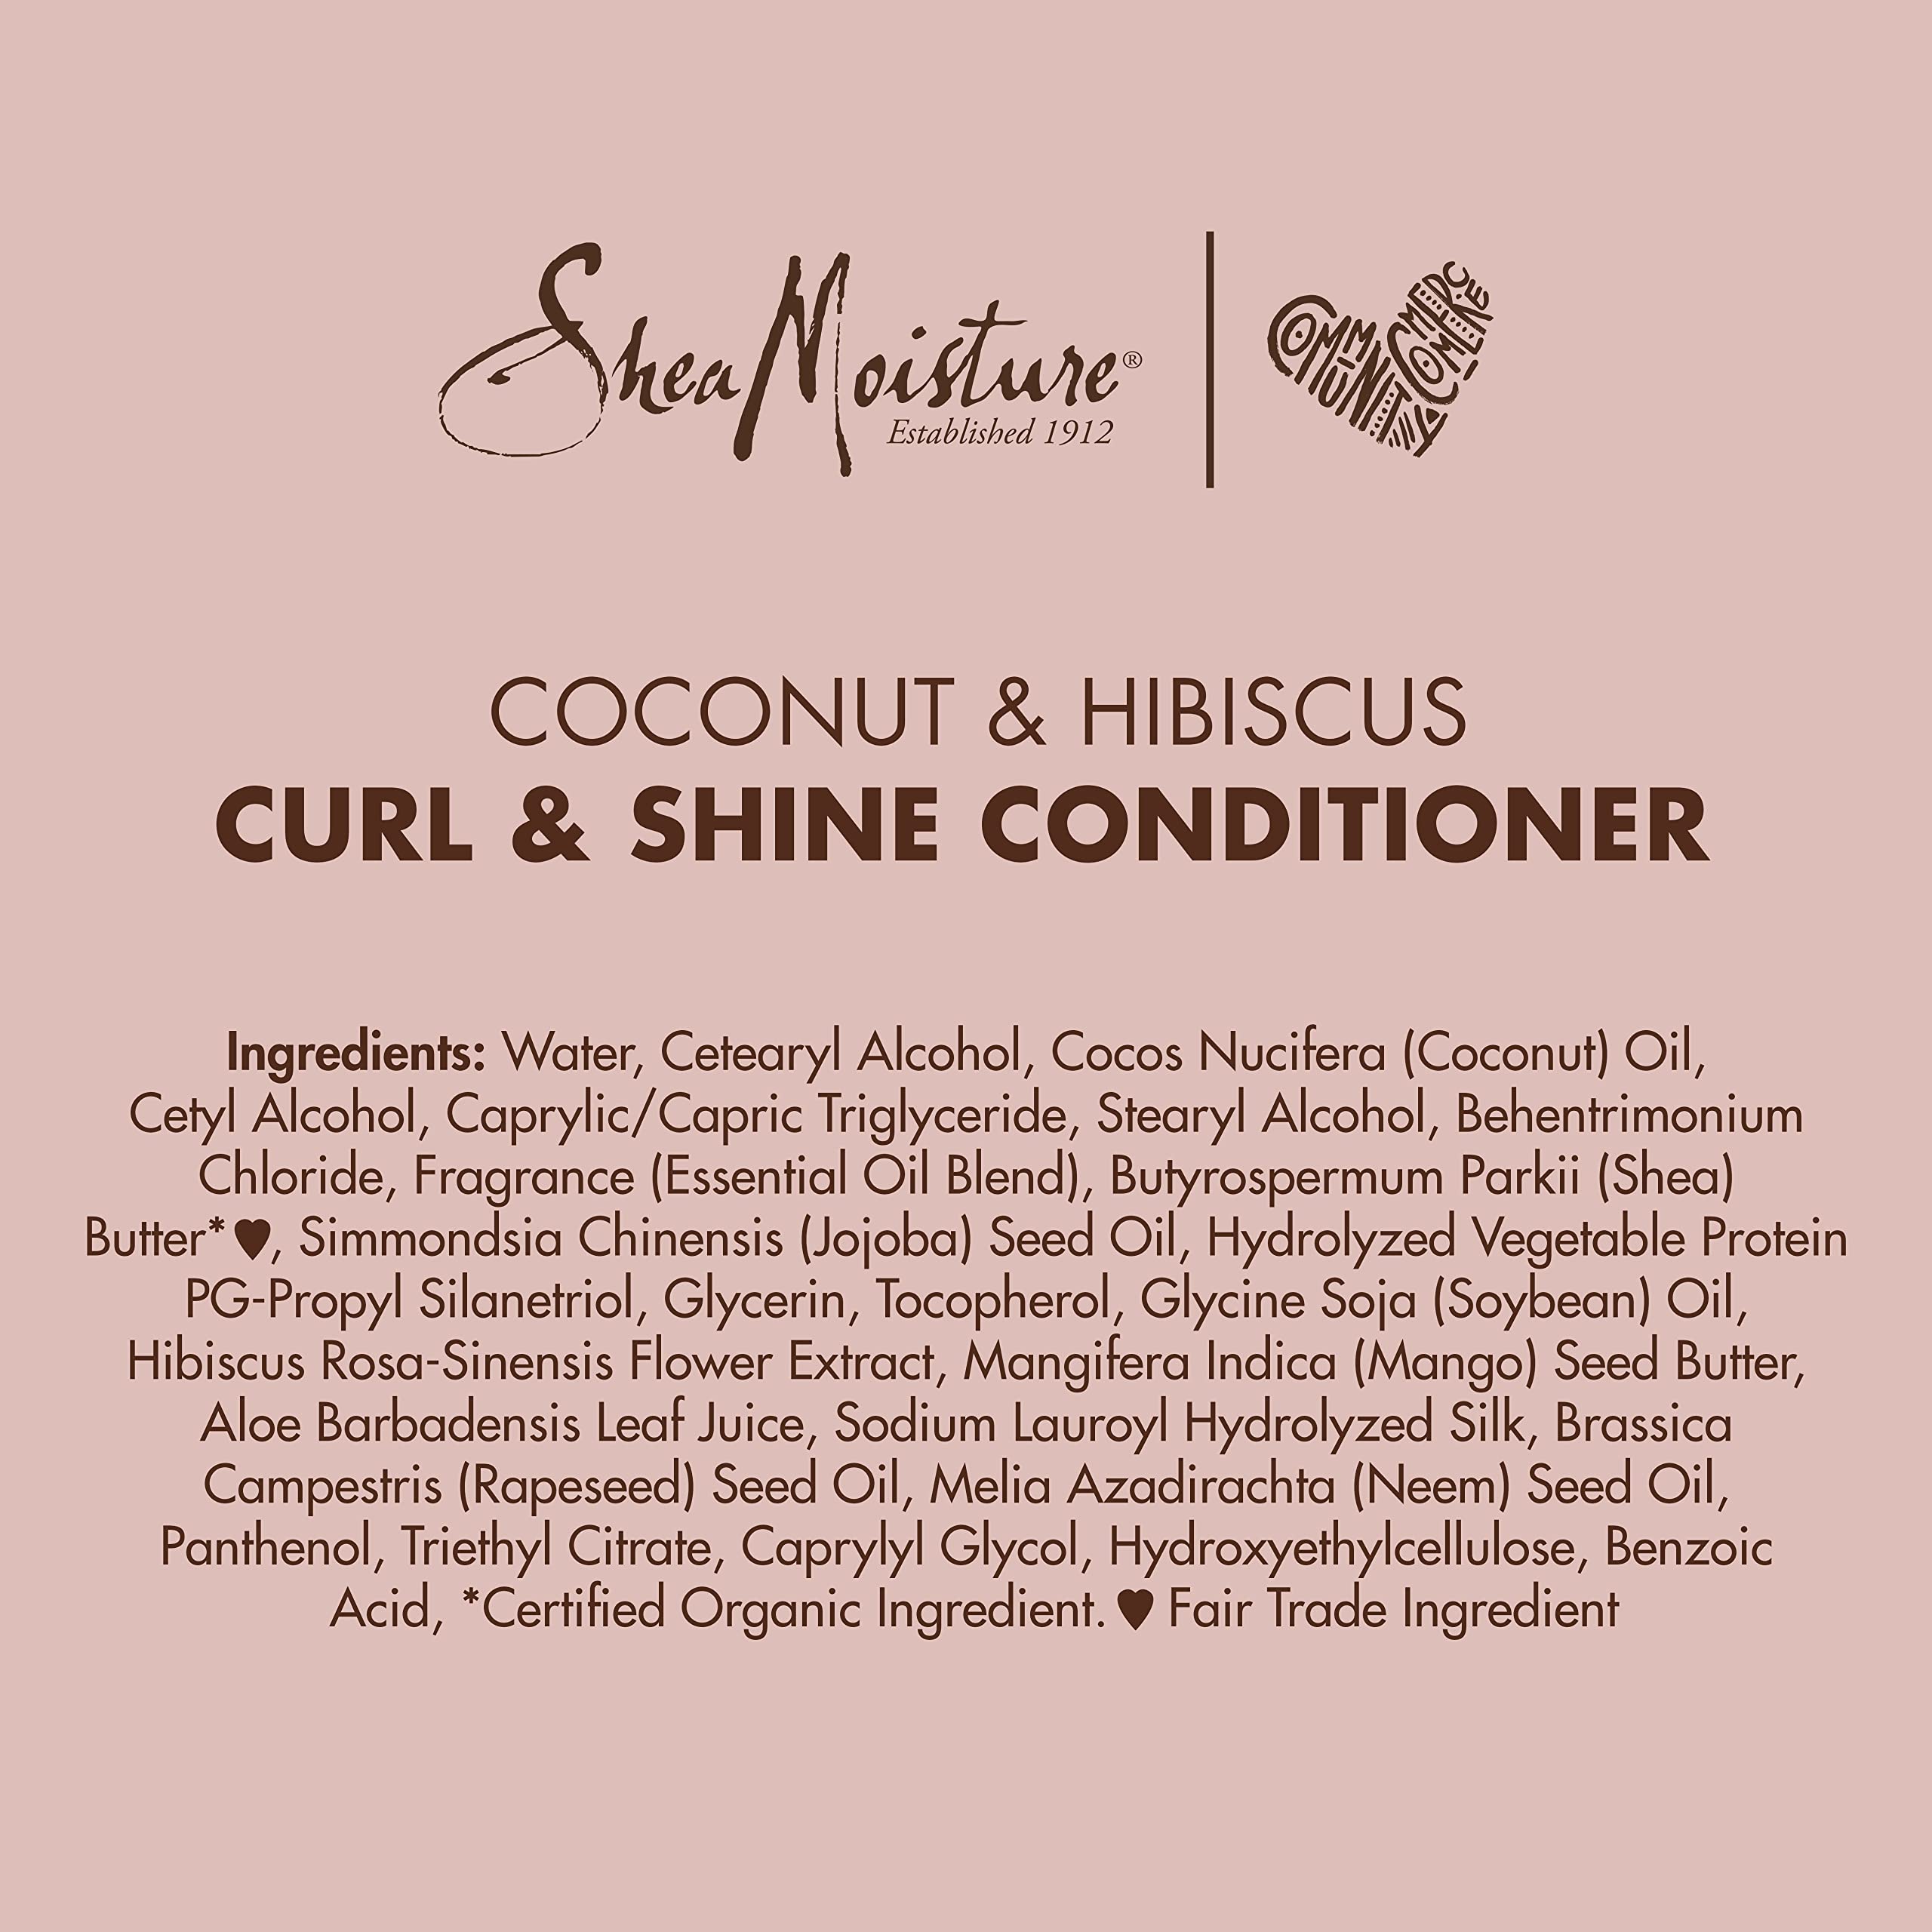 Shea Moisture Hair Conditioner Curly Hair Products, Coconut & Hibiscus Curl & Shine Conditioner, Shea Butter, Coconut Oil, Vitamin E & Neem Oil, Frizz Control, Family Size, 16 Fl Oz Ea